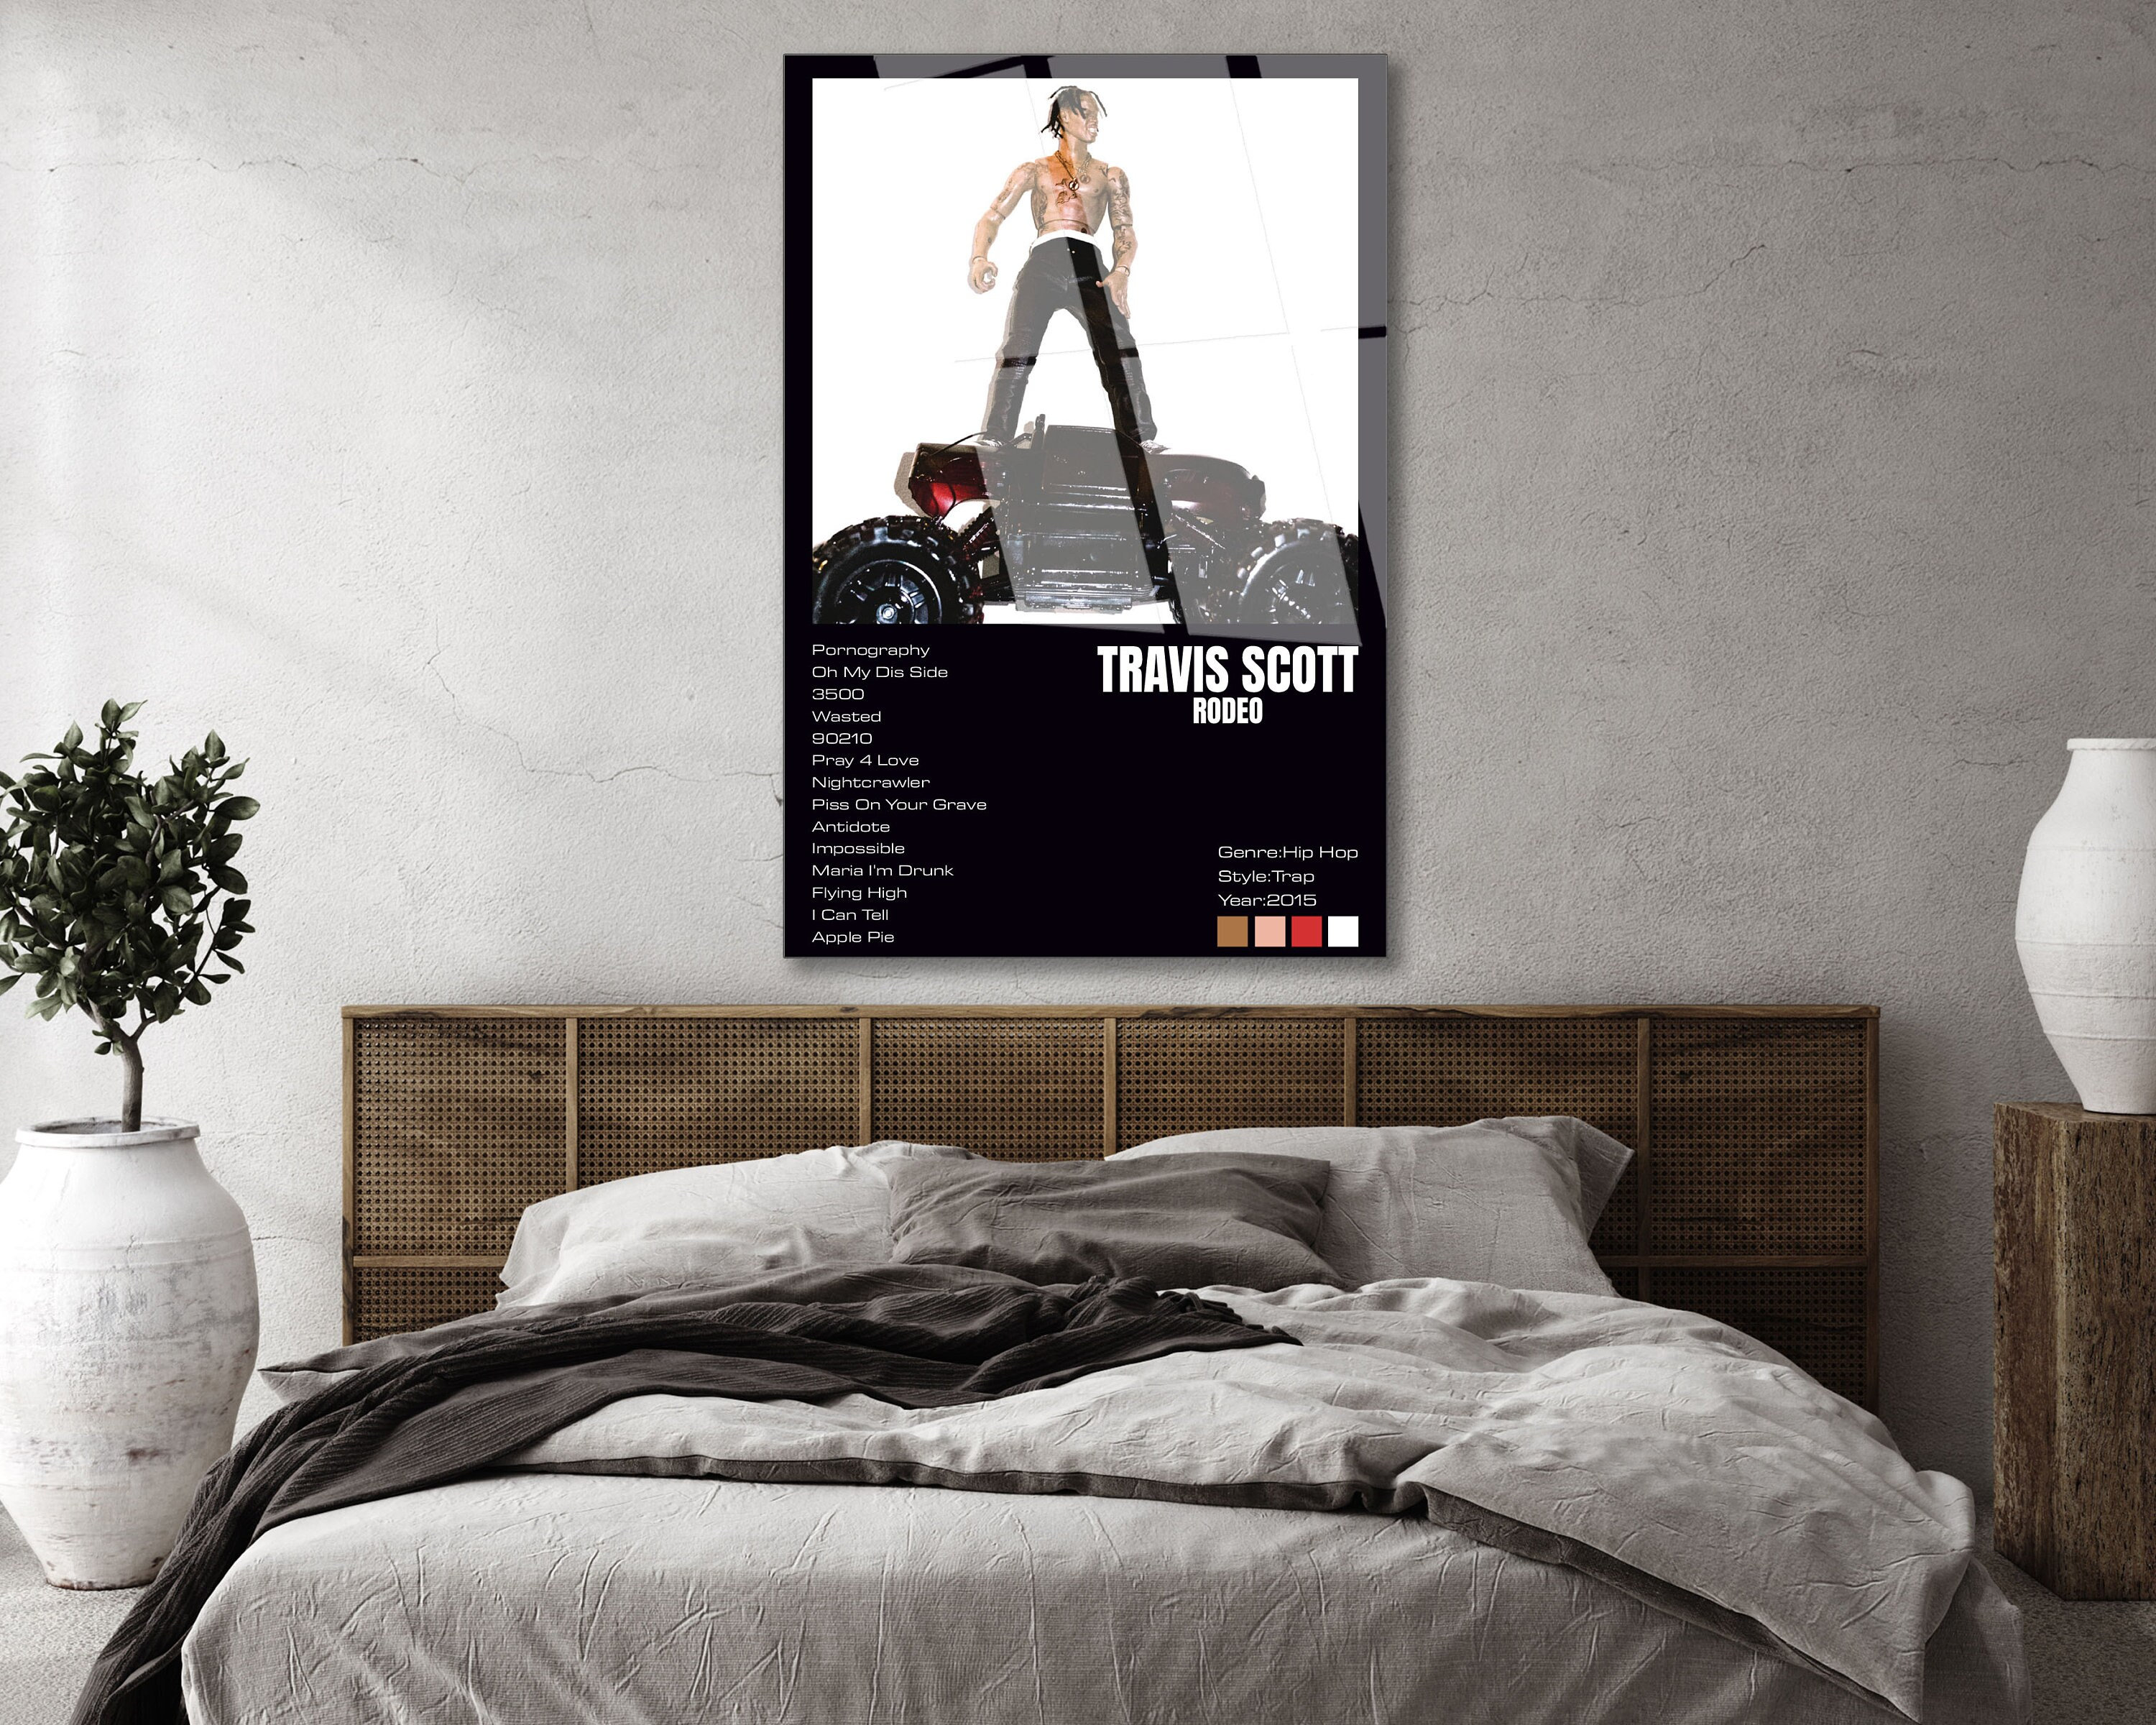 Travis Scott-rodeo Album Poster Tempered Glass Wall Art , Famous Rap Artist  Glass Wall Decor, Ready to Hang Poster Art , Hip Hop Album Cover 